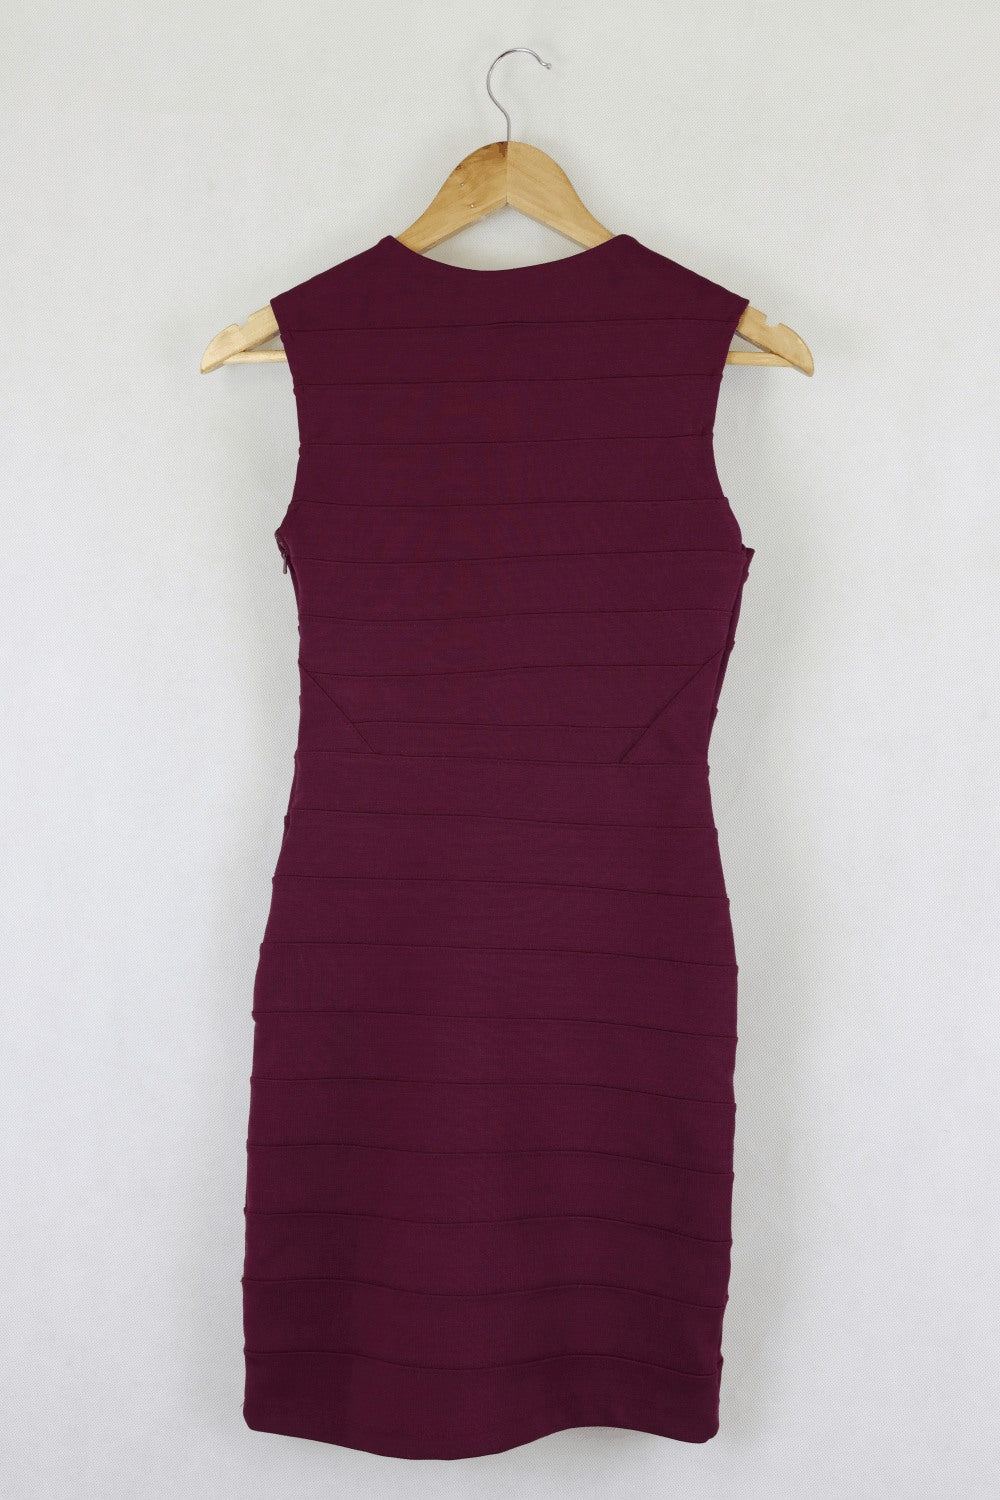 Topshop Purple Dress UK 8